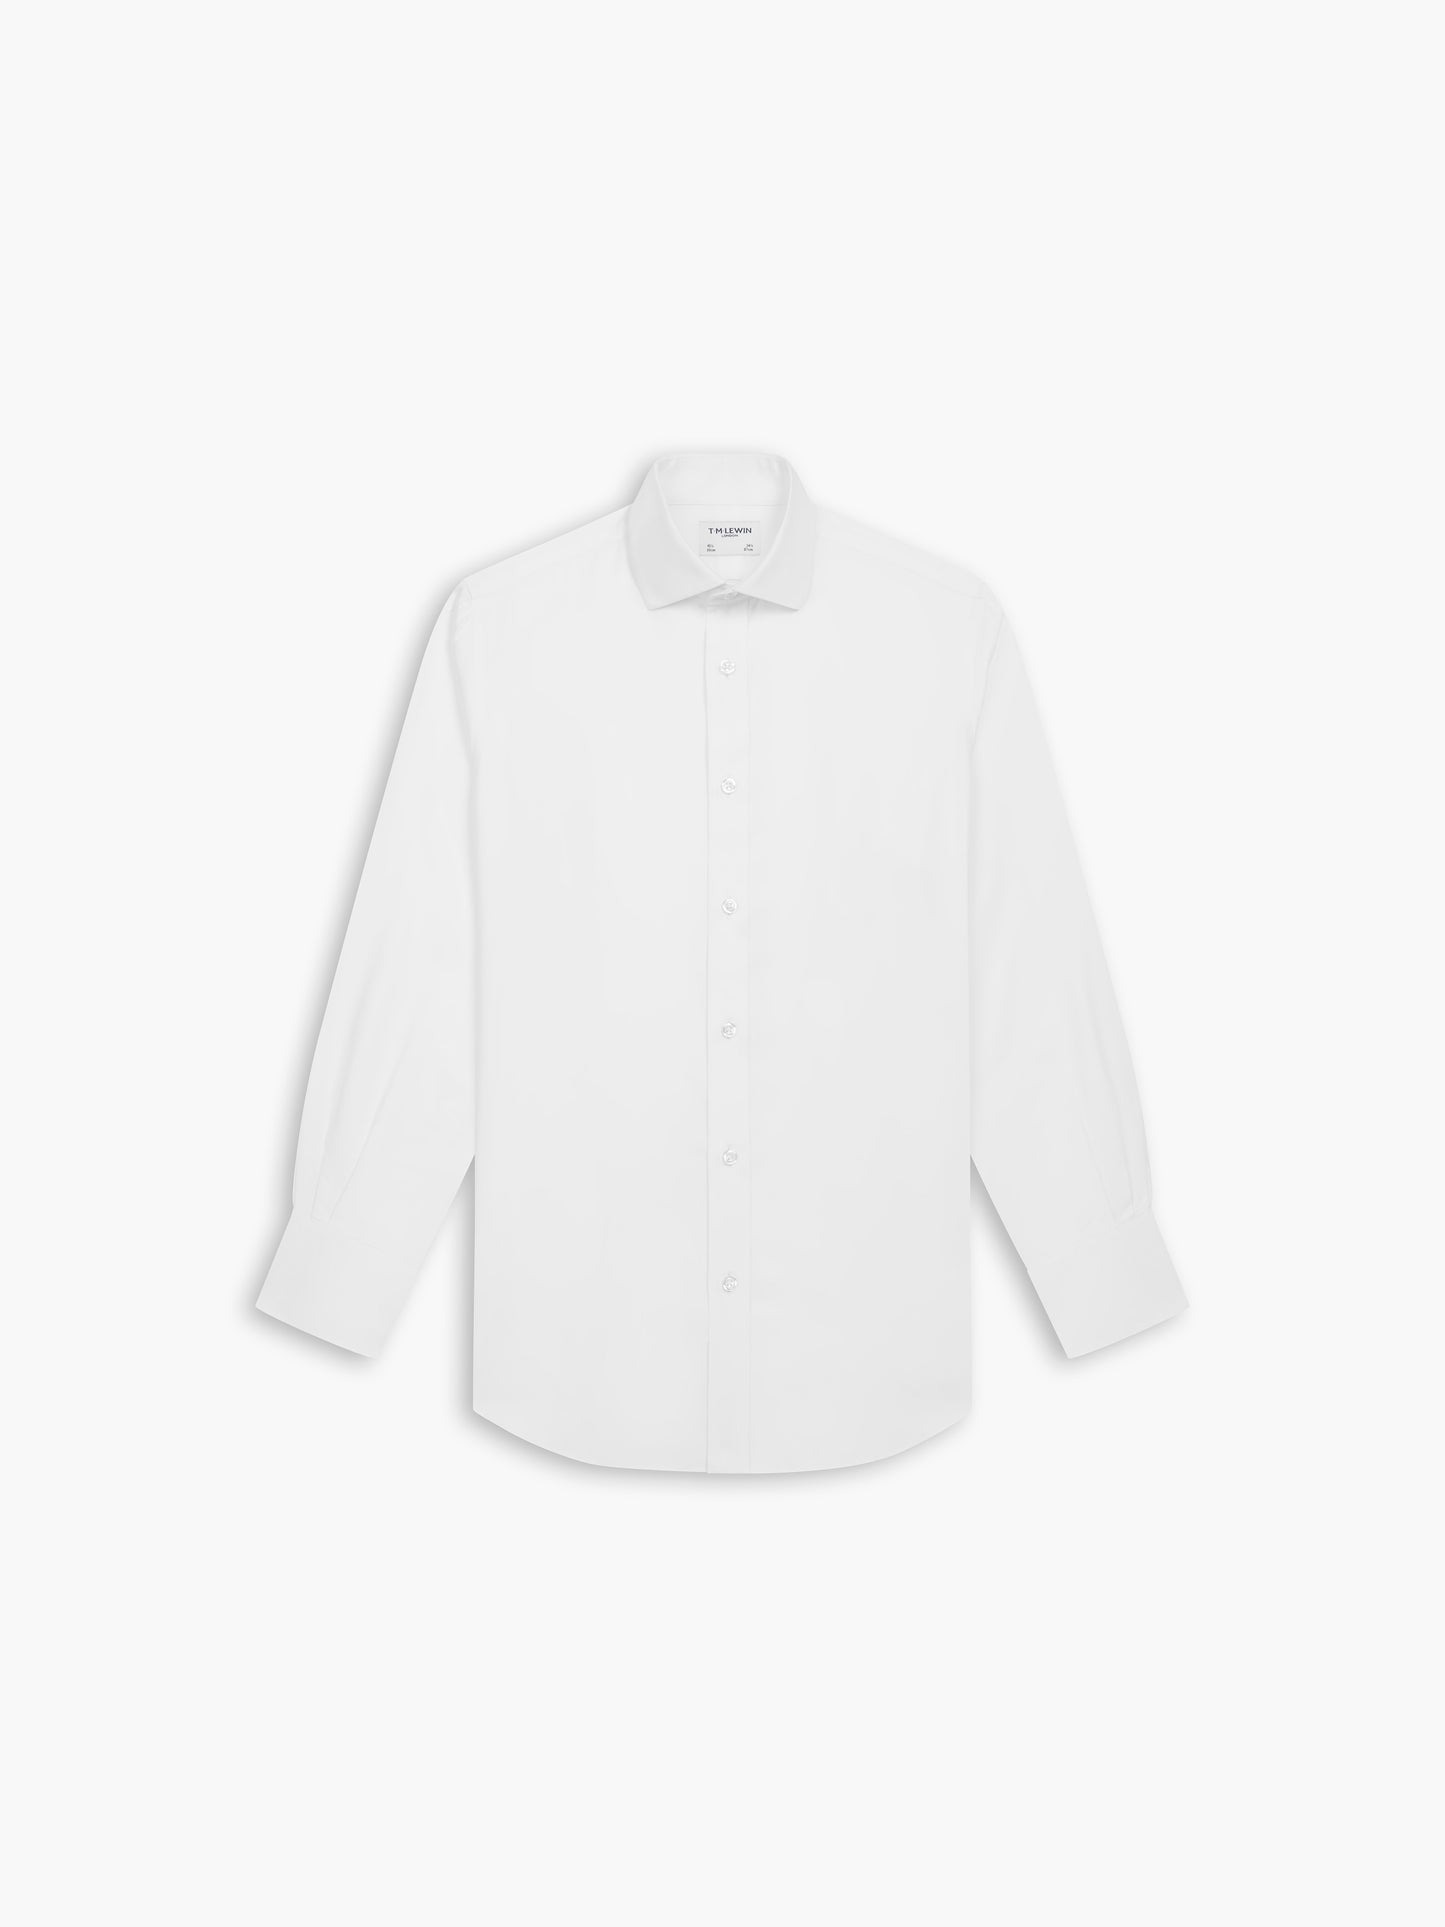 Non-Iron White Oxford Regular Fit Single Cuff Classic Collar Shirt